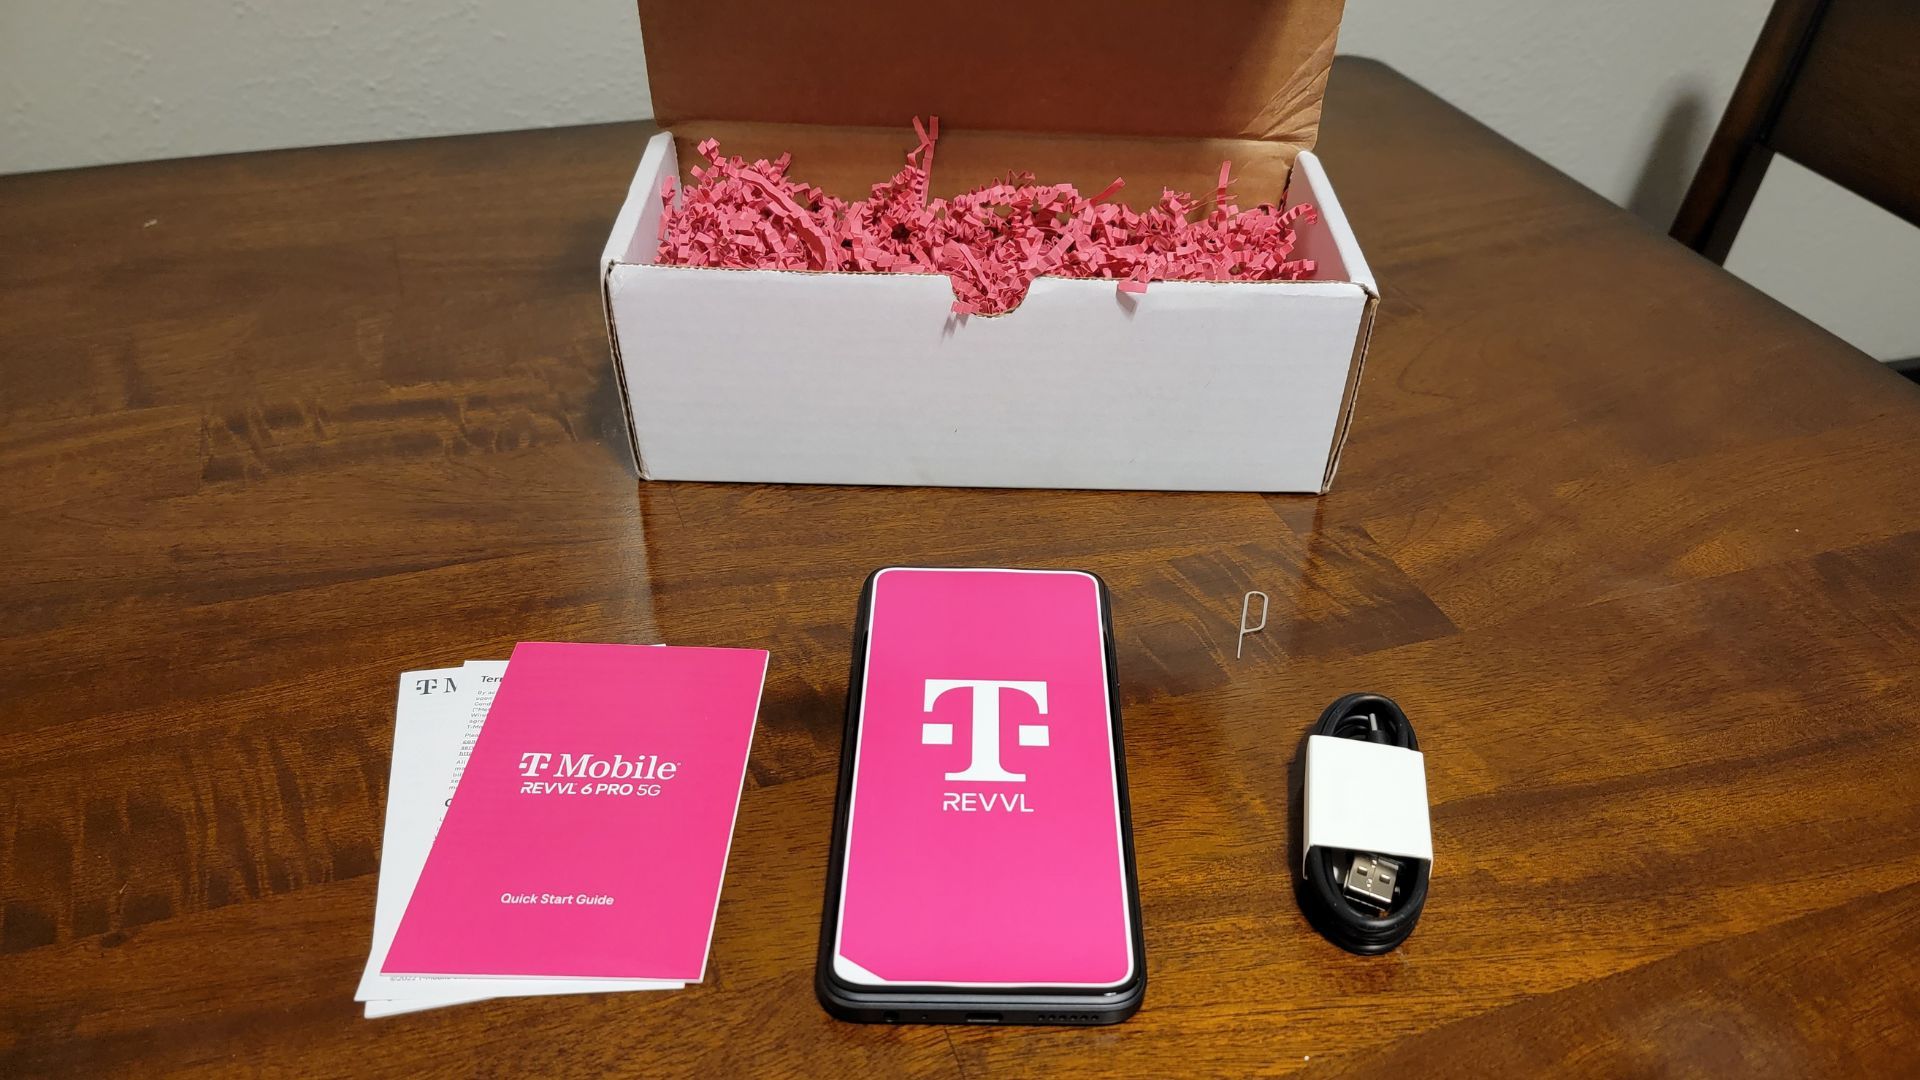 tmobile revvl 6 pro smartphone packaging, all pink in true tmobile style